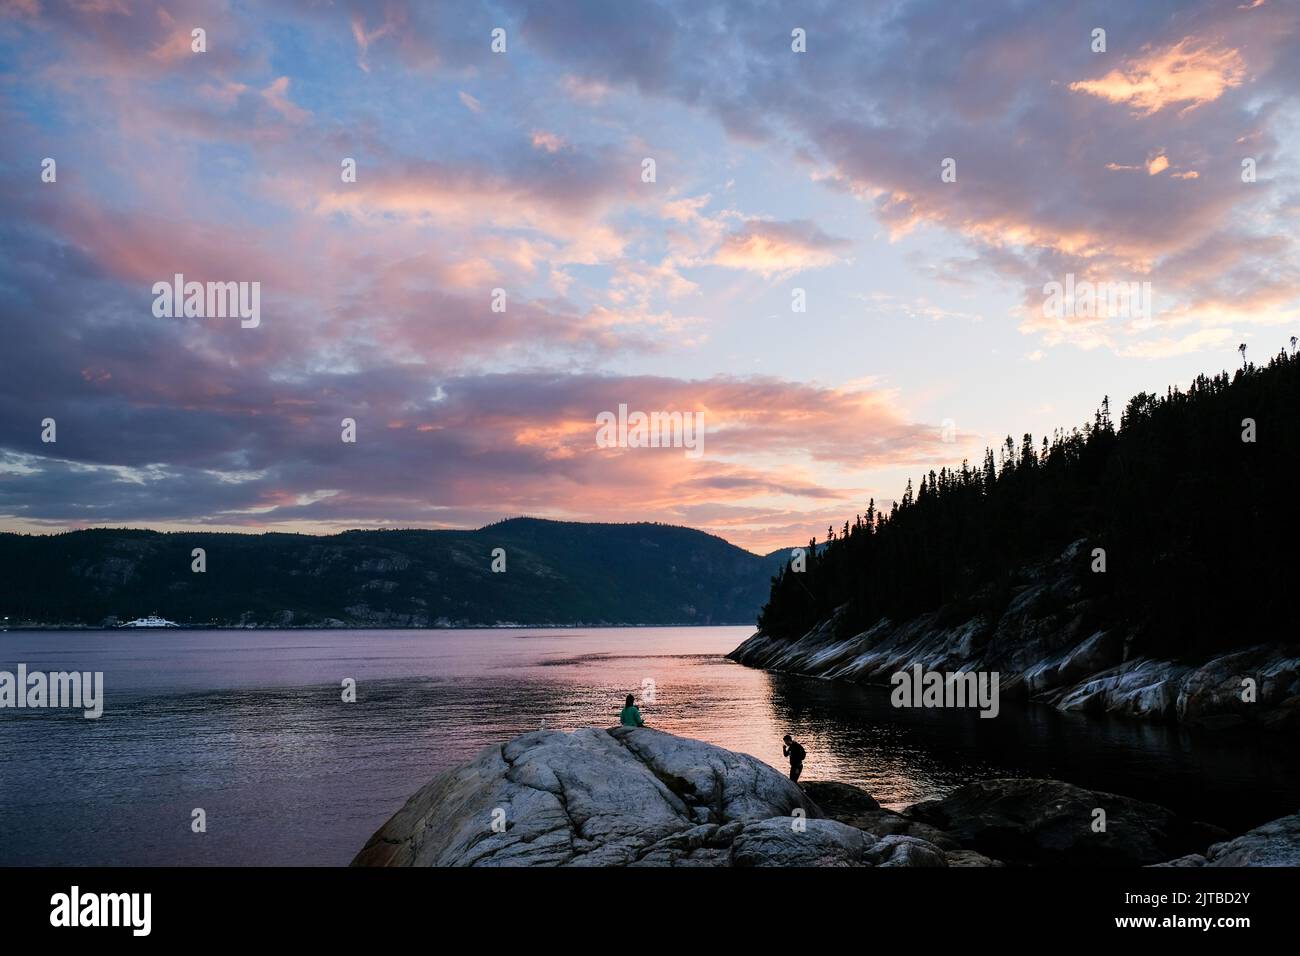 Evening view of the Saguenay Fjord, Saguenay River, near Tadoussac, Quebec, Canada. Stock Photo